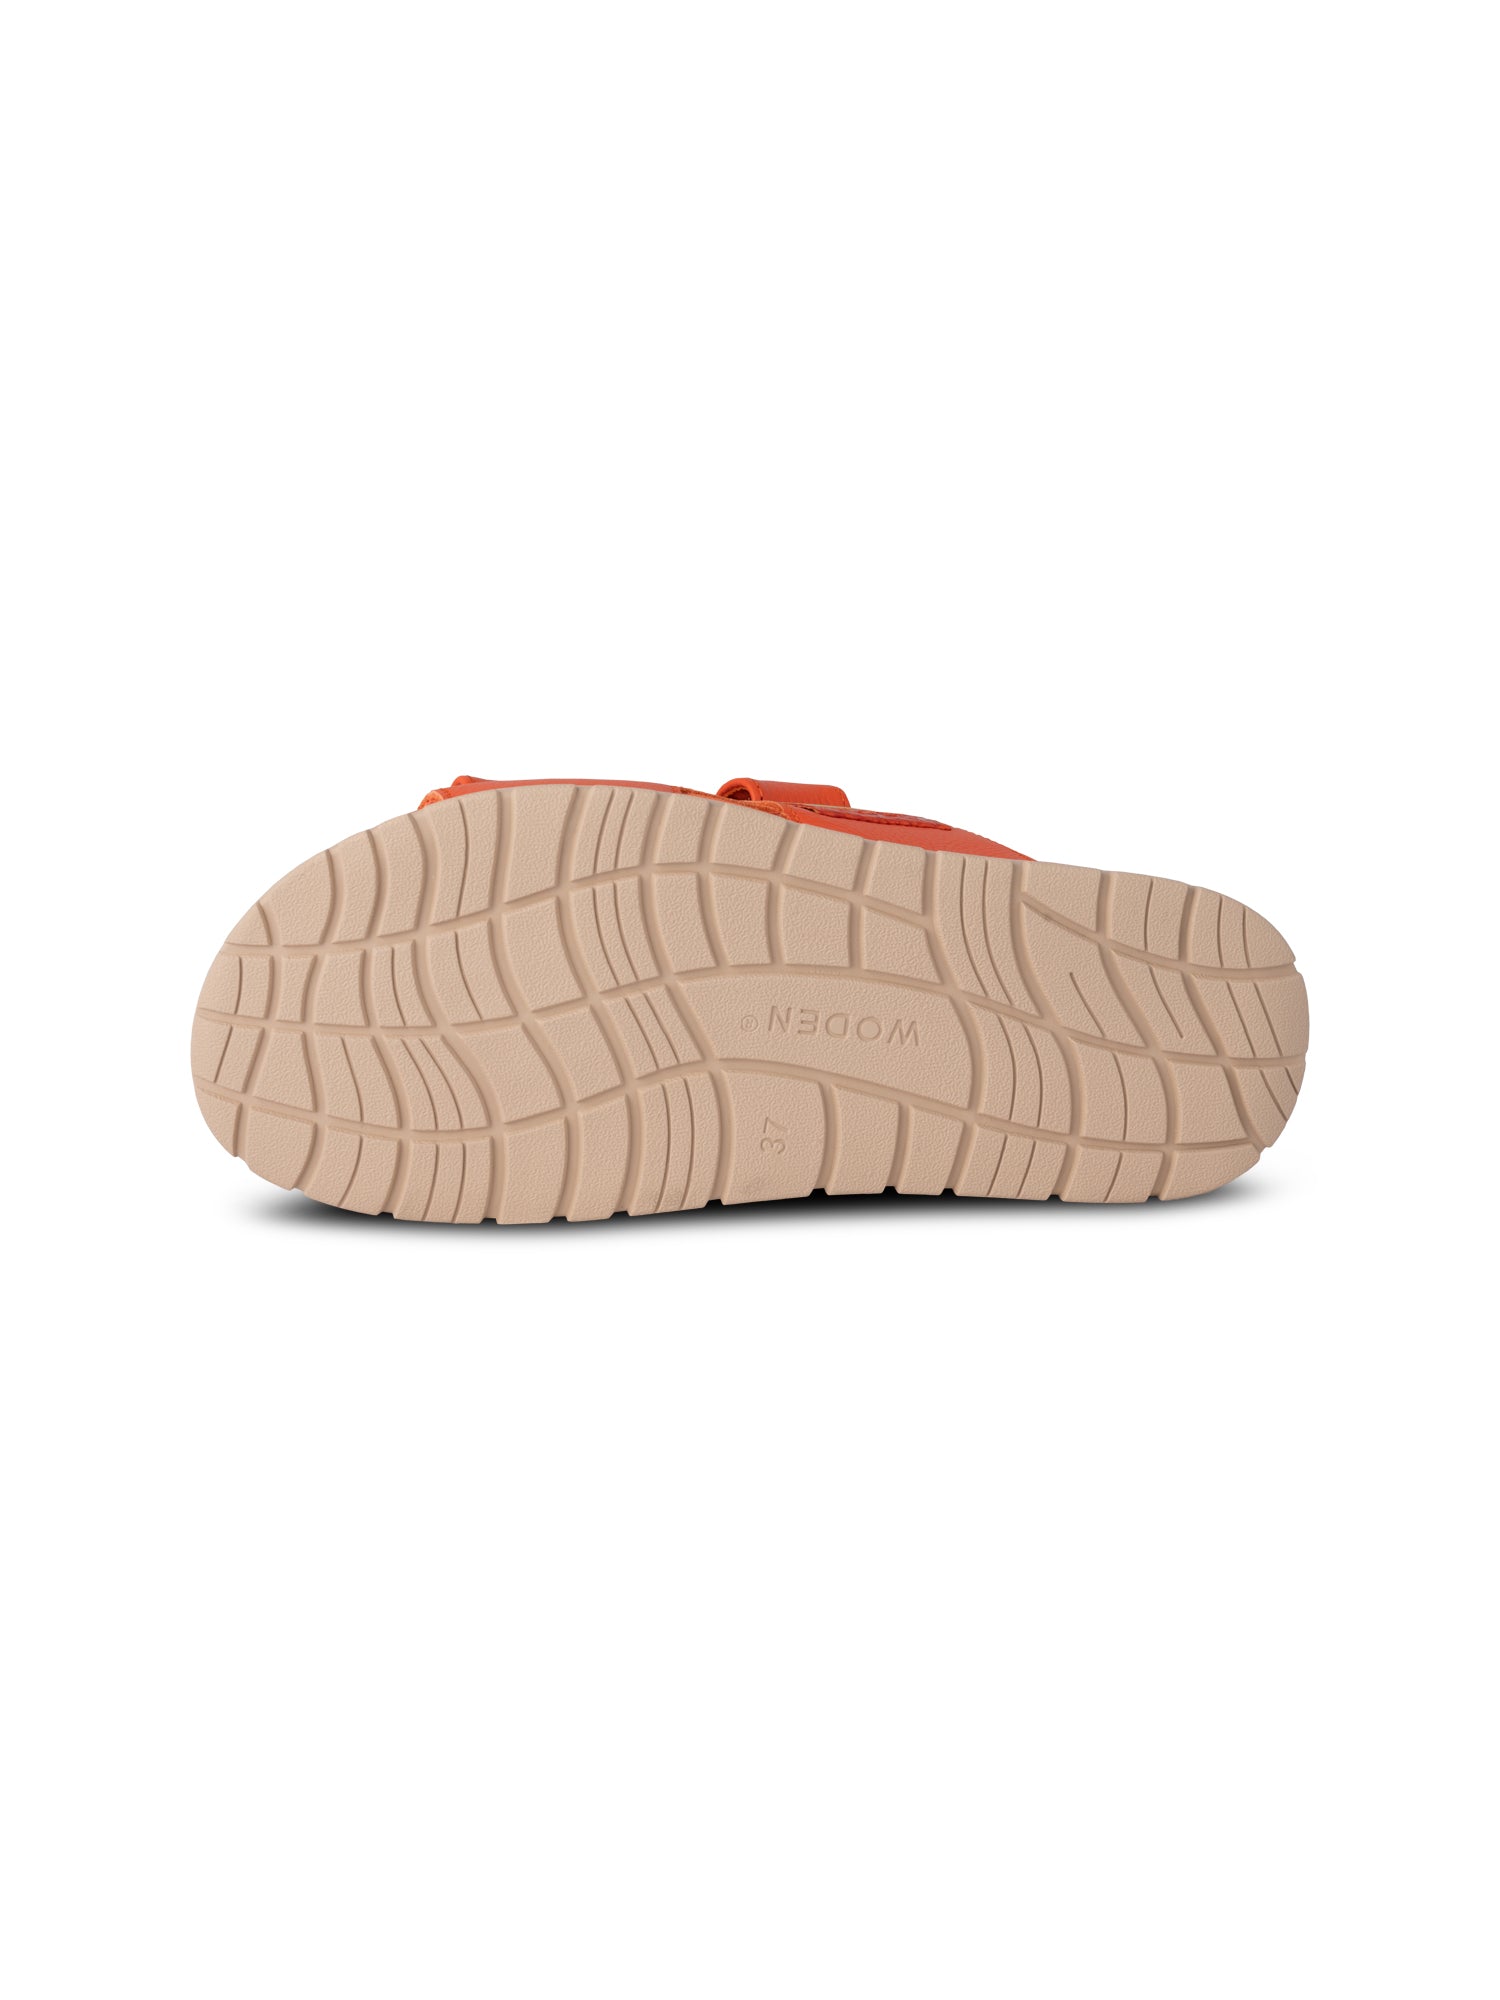 Lisa Orange Leather Sandal | Woden